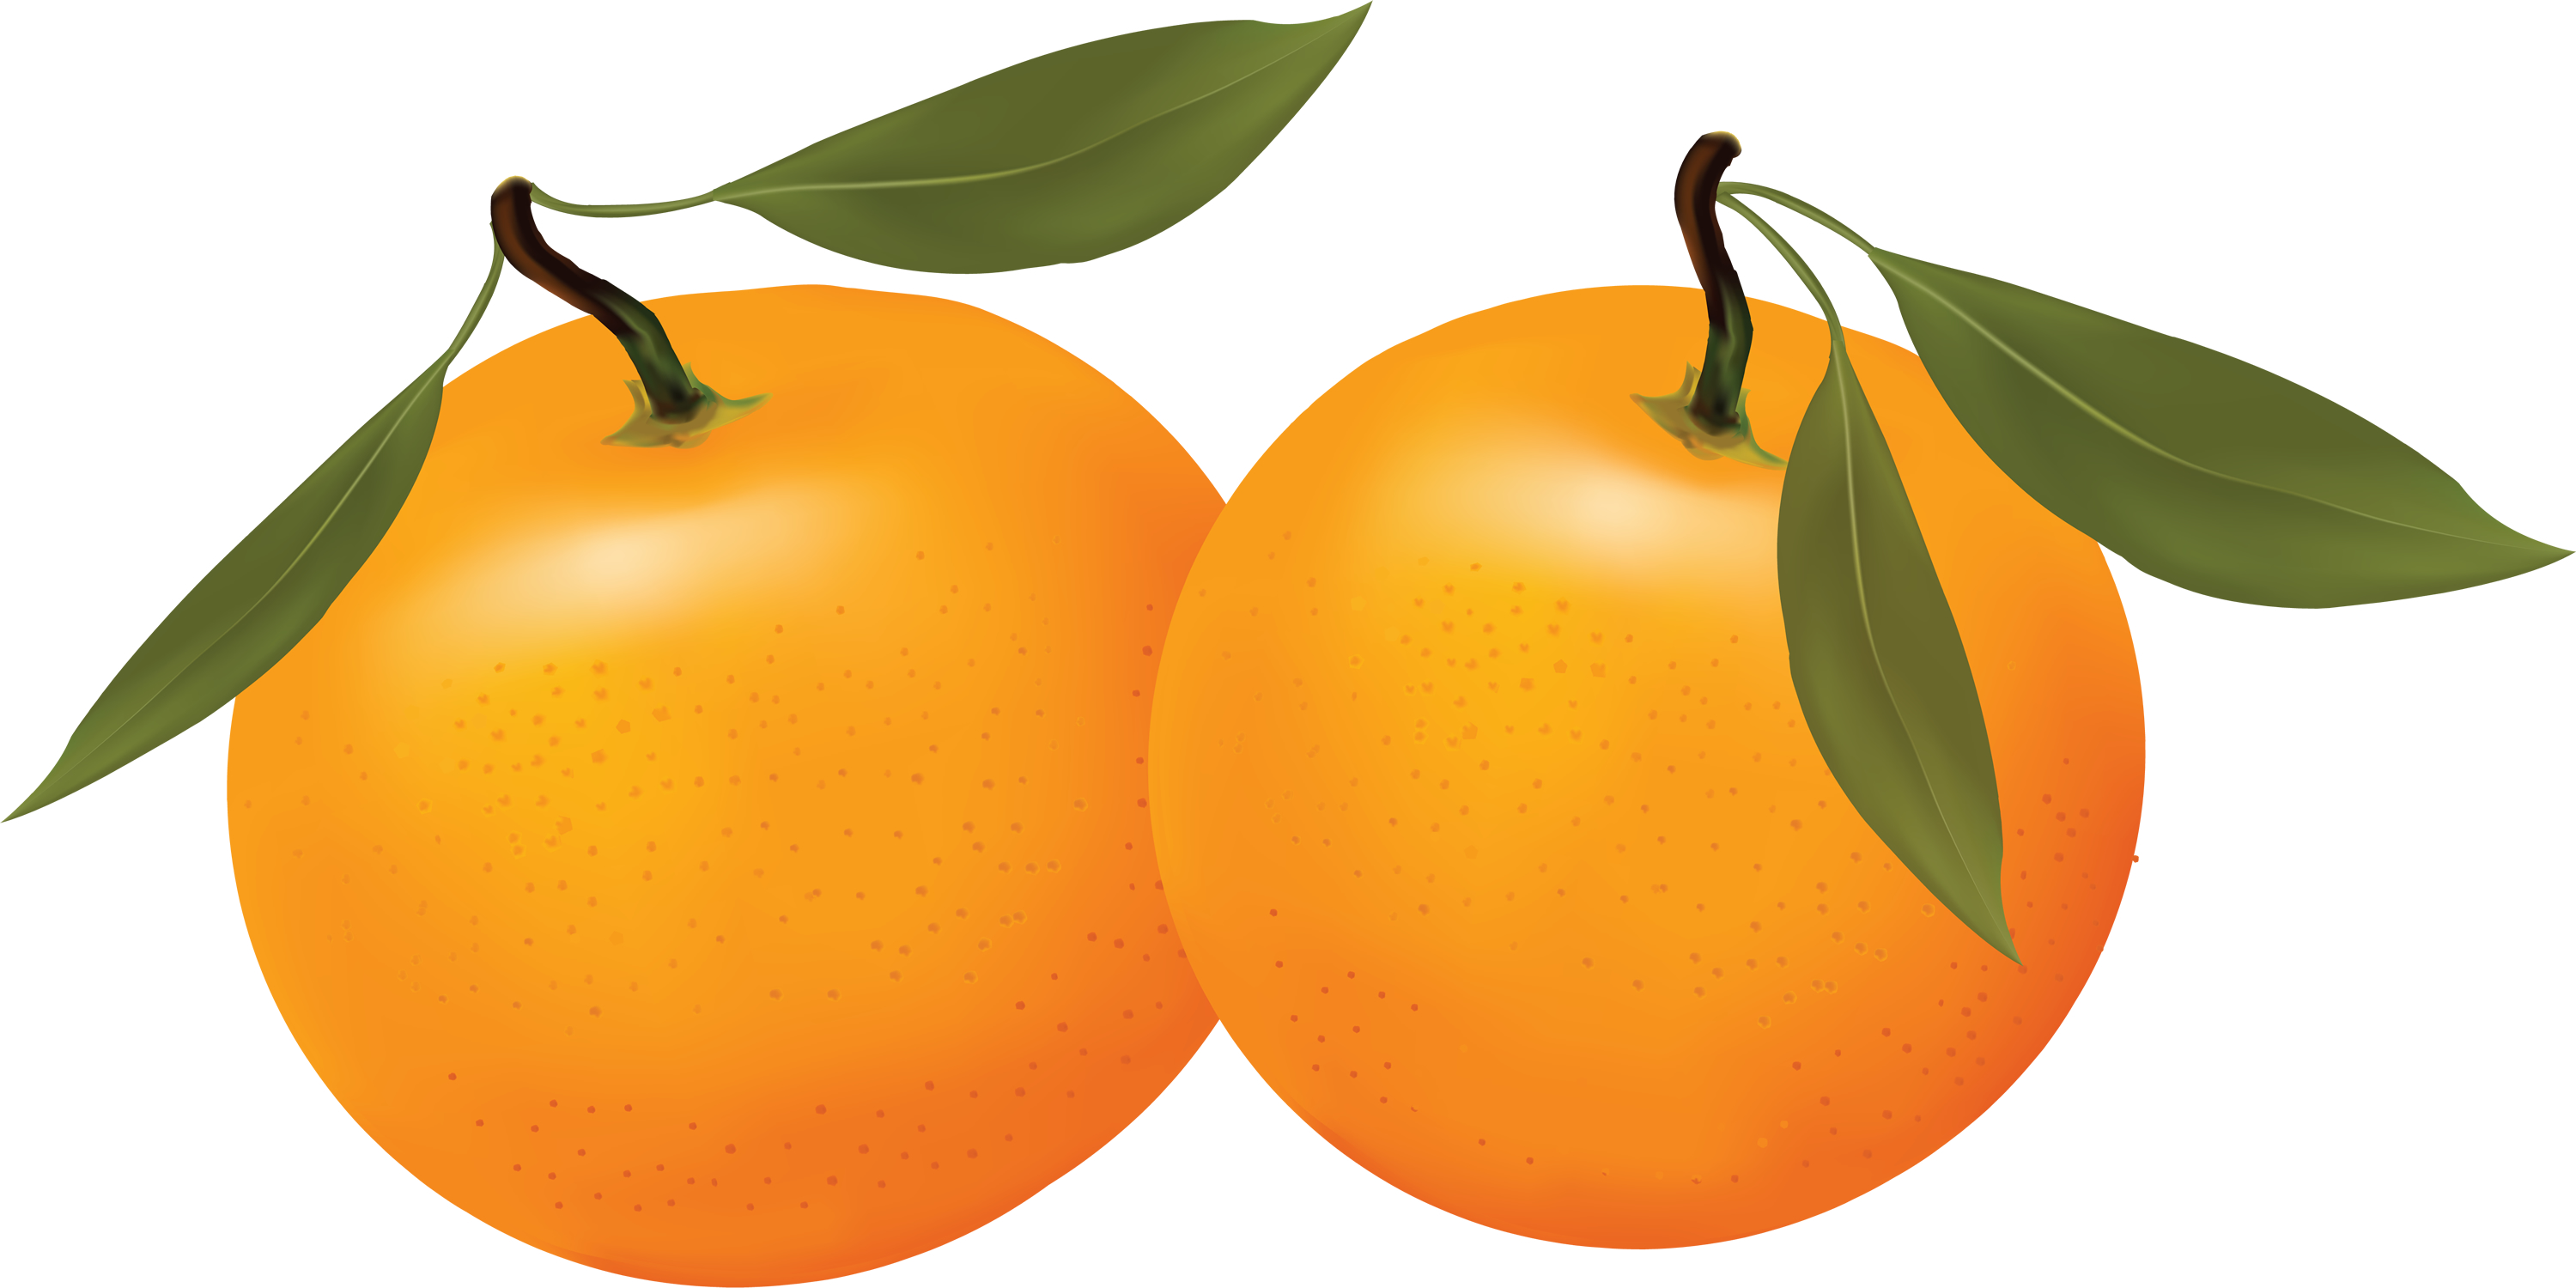 Download wallpaper: Oranges clipart, photo, download